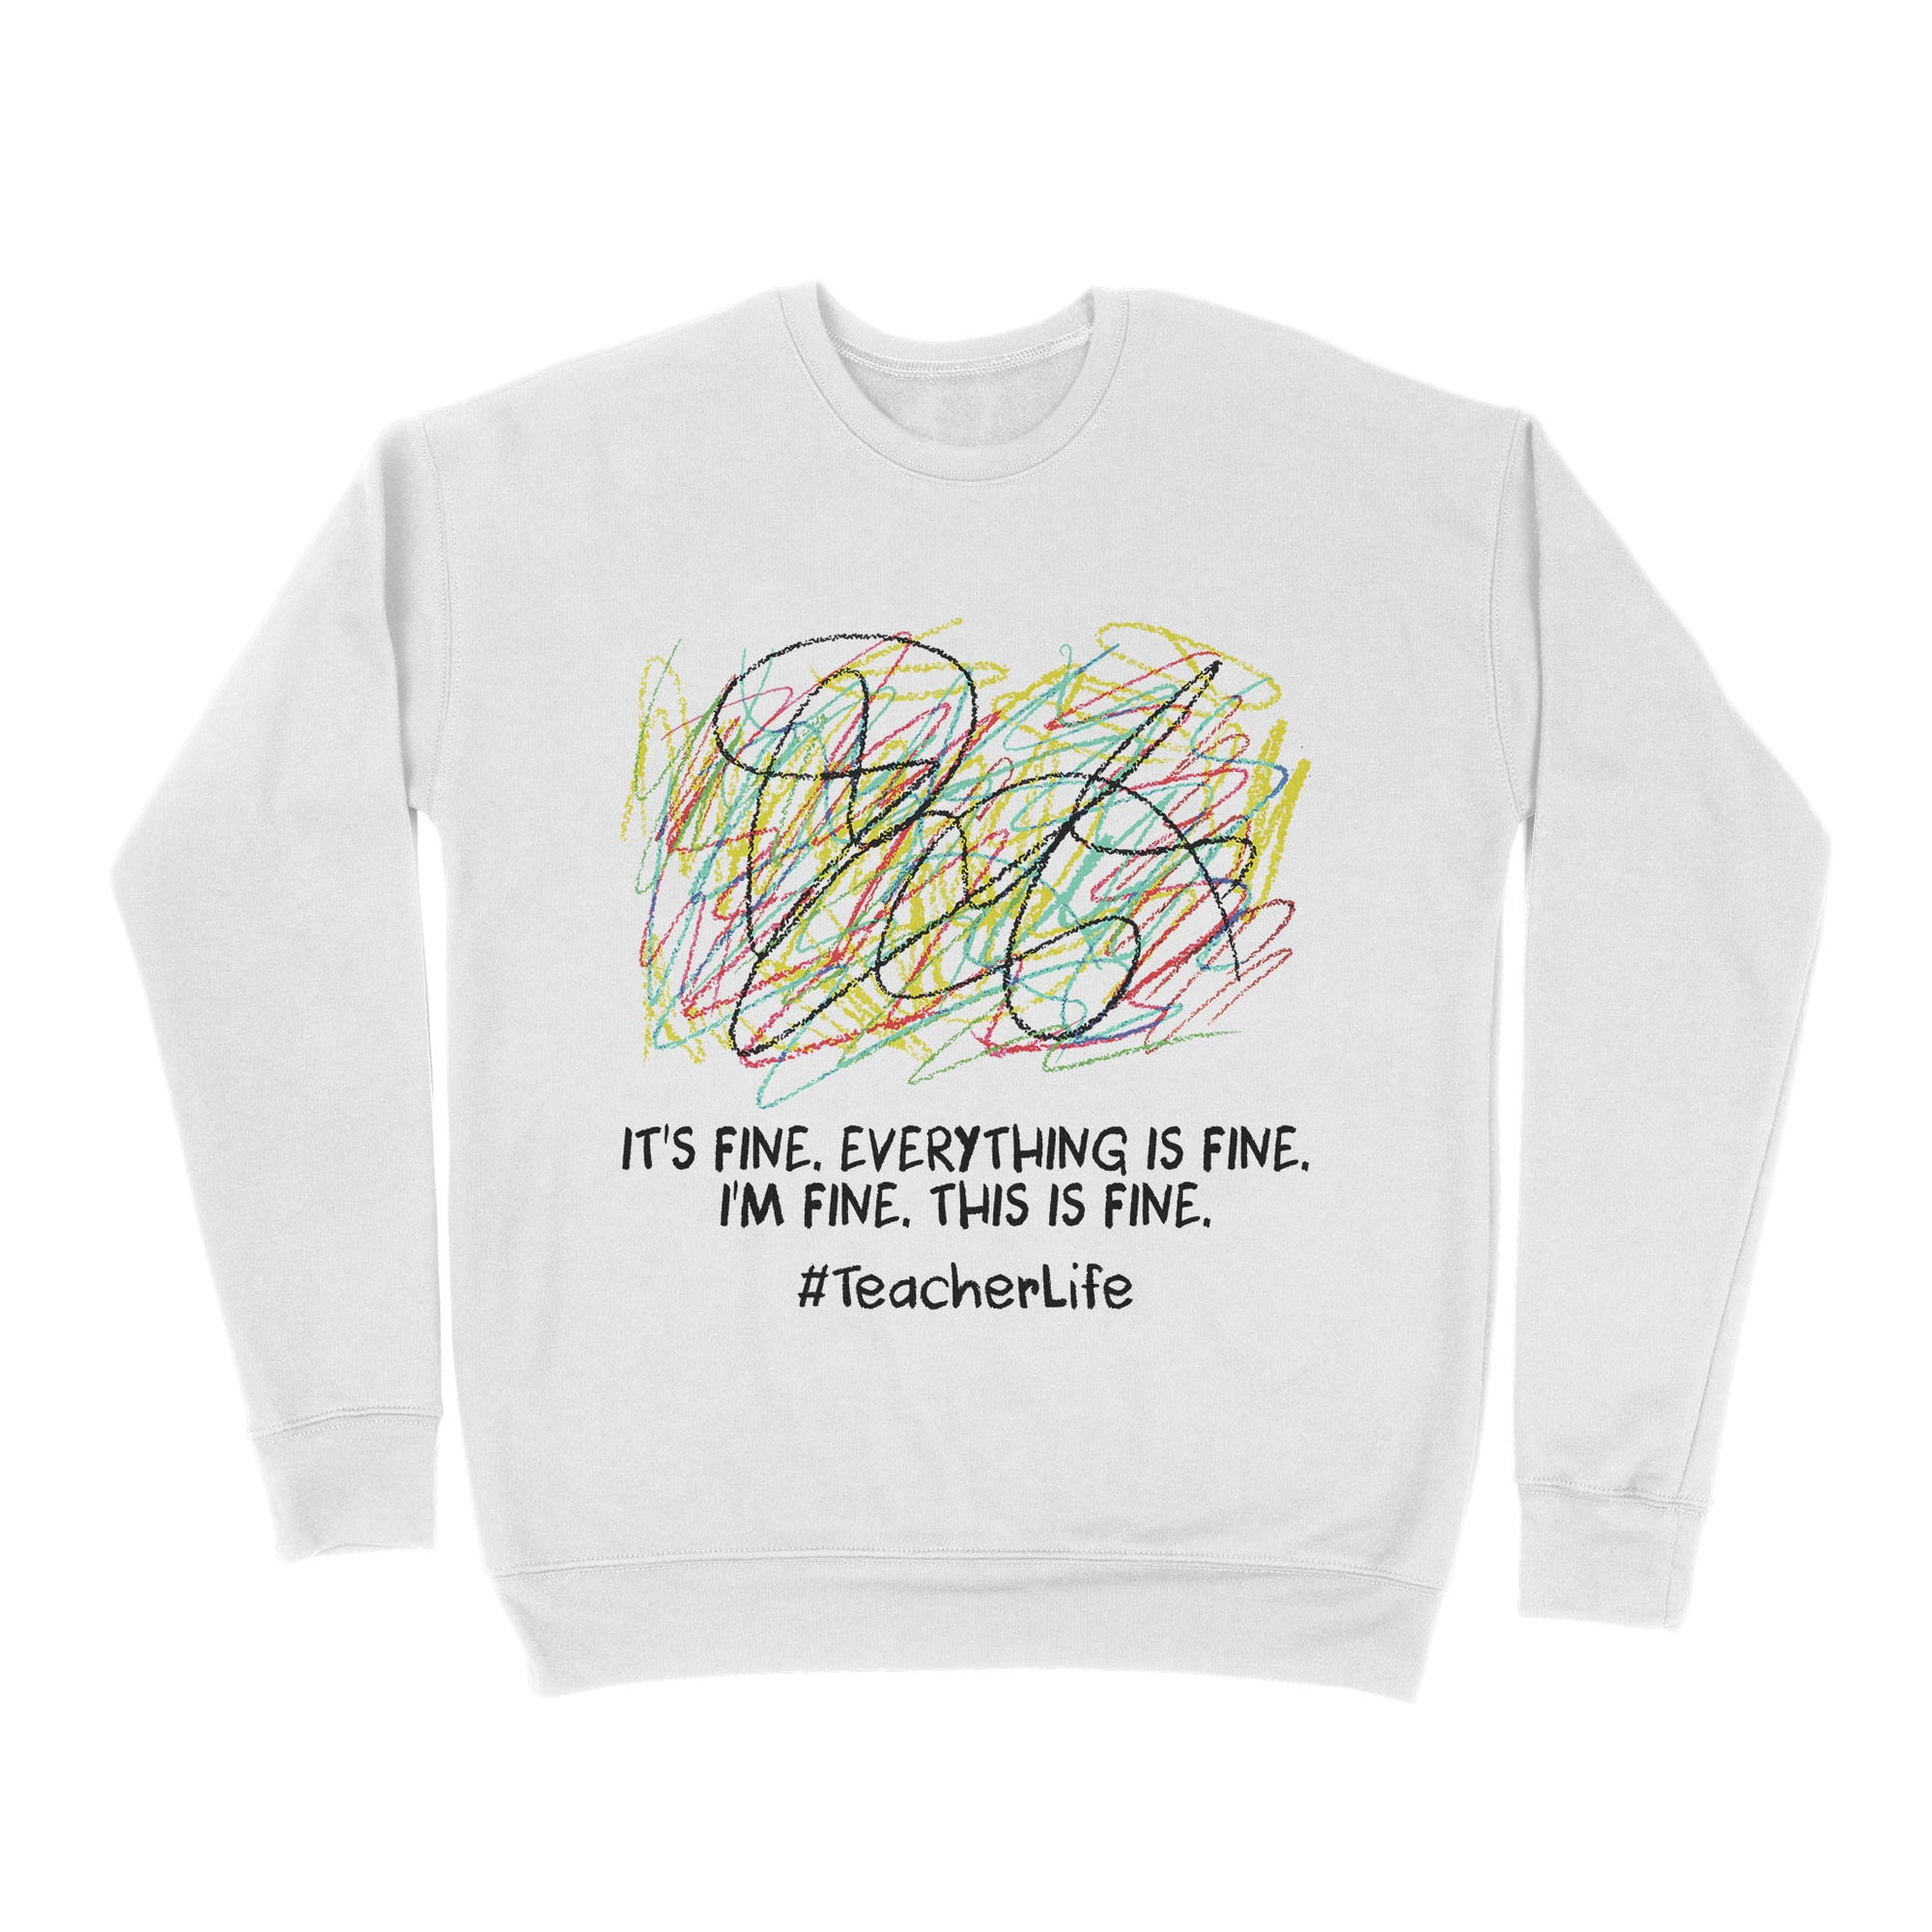 Premium Crew Neck Sweatshirt - It's Fine I'm Fine Everything Is Fine Teacher Life